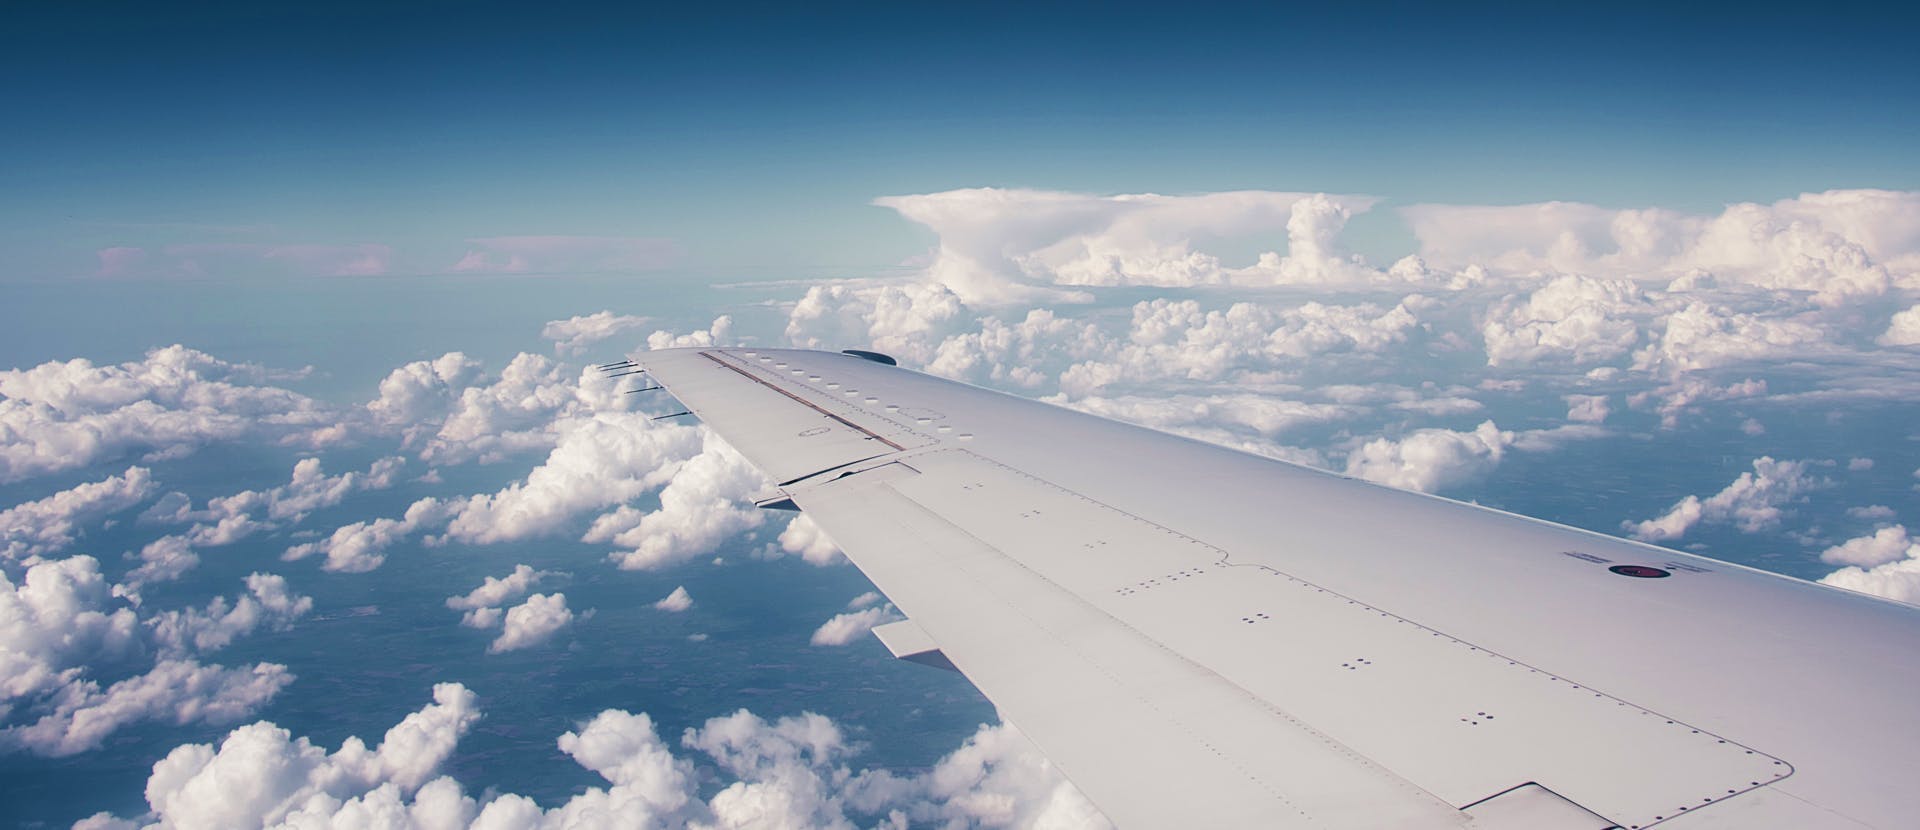 nature vehicle transportation airplane outdoors azure sky sky landscape scenery flight